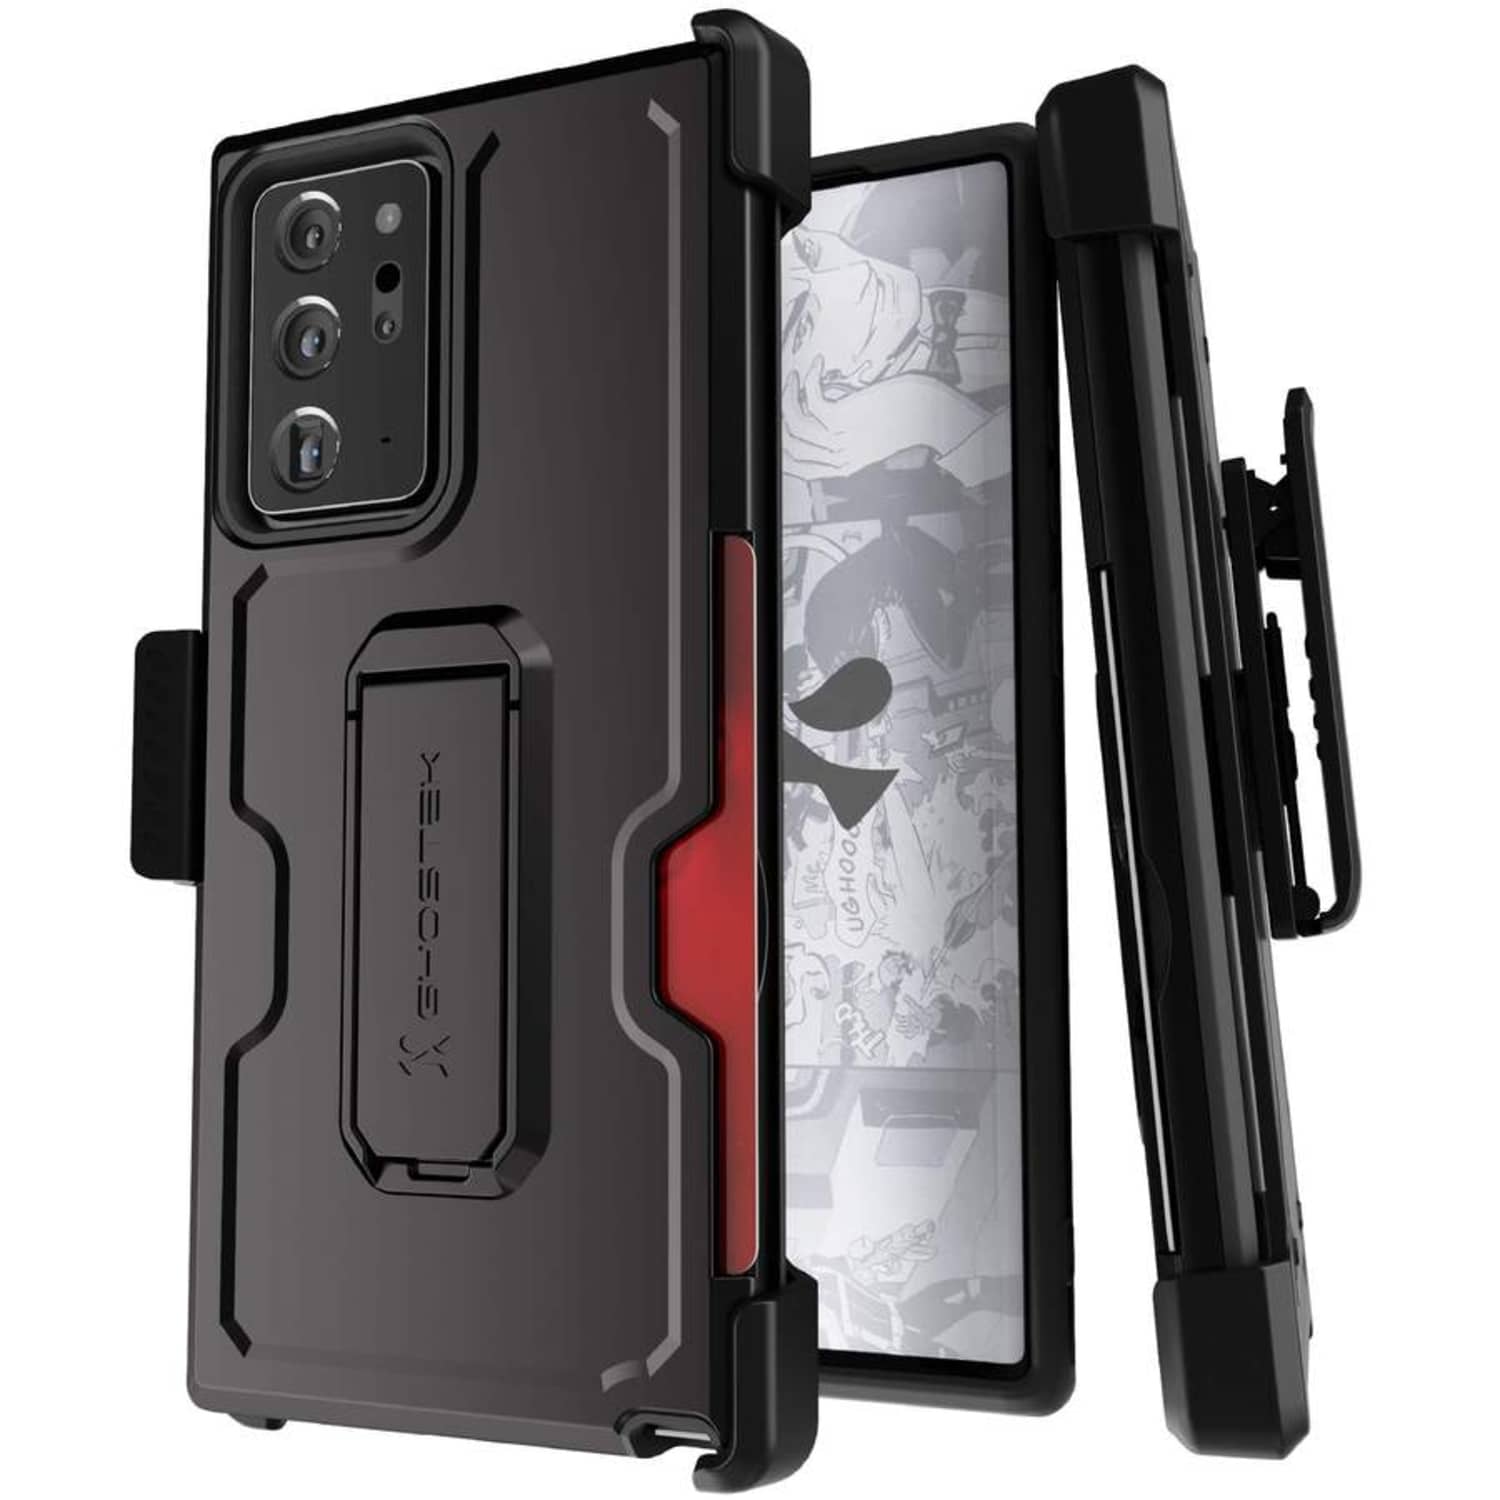 Ghostek Iron Armor Galaxy Note 20 Ultra Case With Belt Clip Hostler